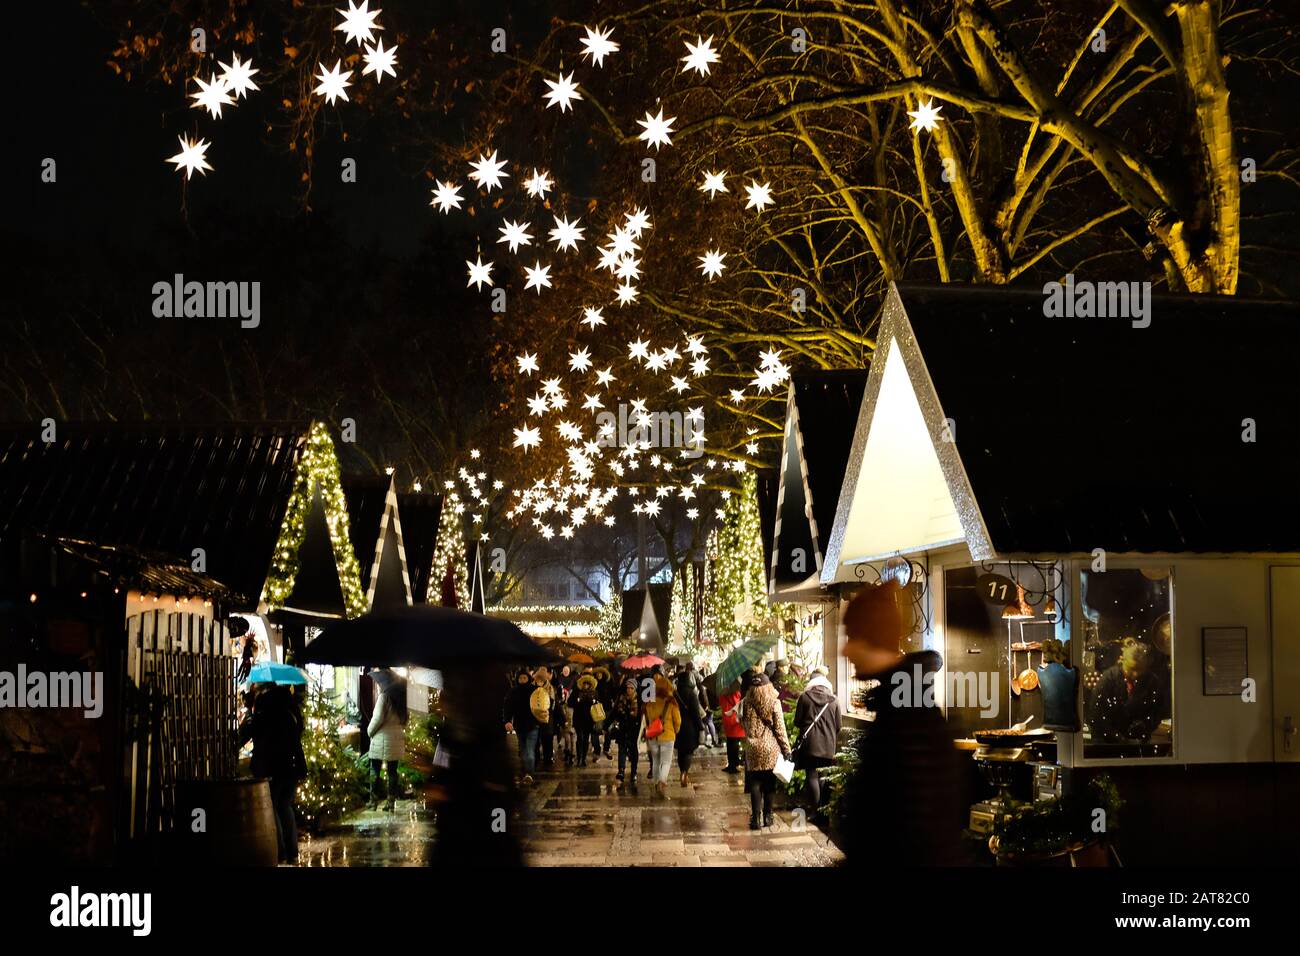 German Christmas market at night  with market stalls and illuminated stars Stock Photo